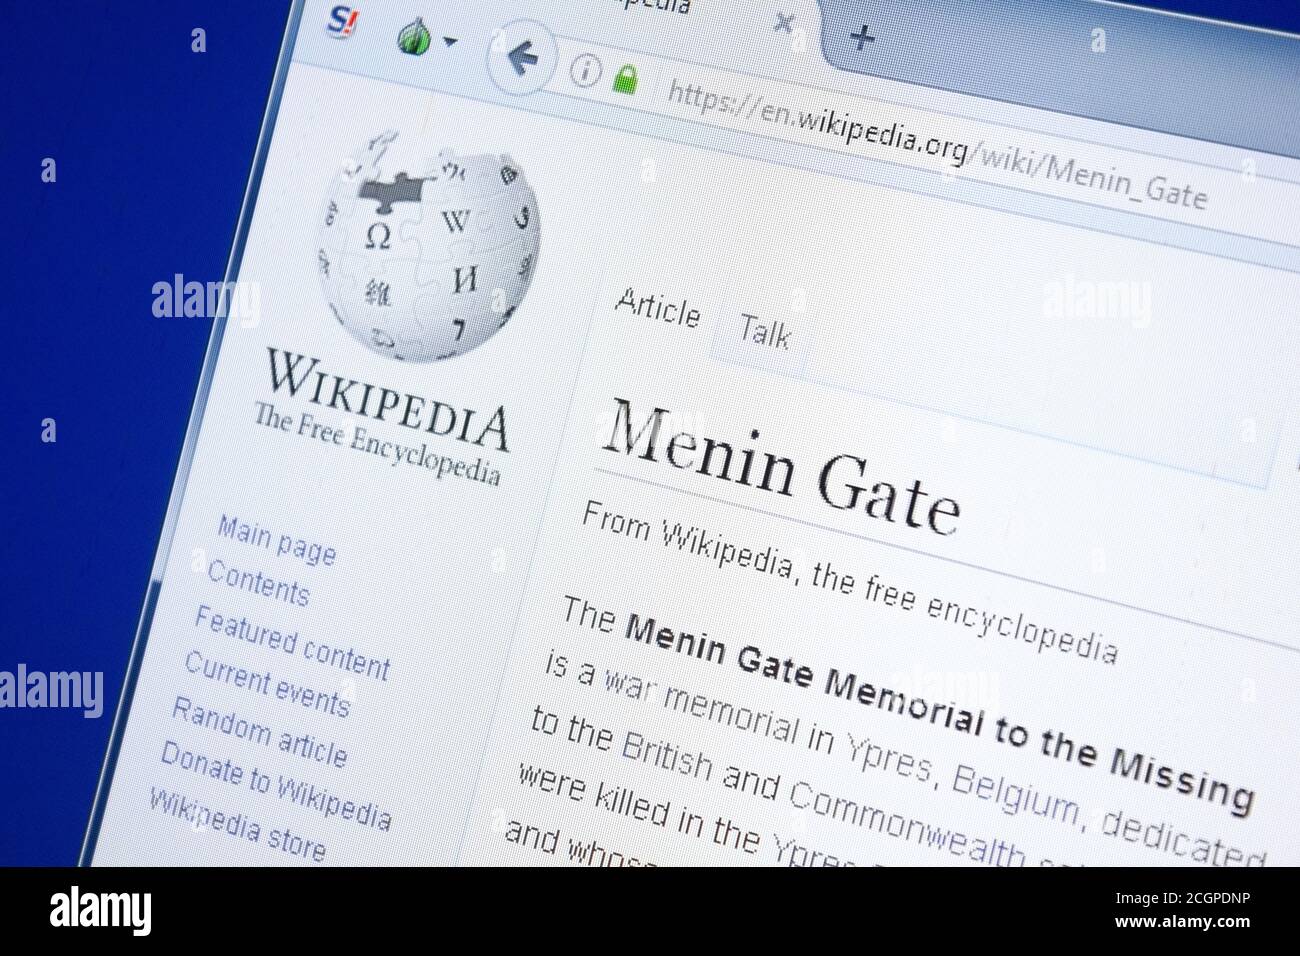 Menin Gate - Wikipedia